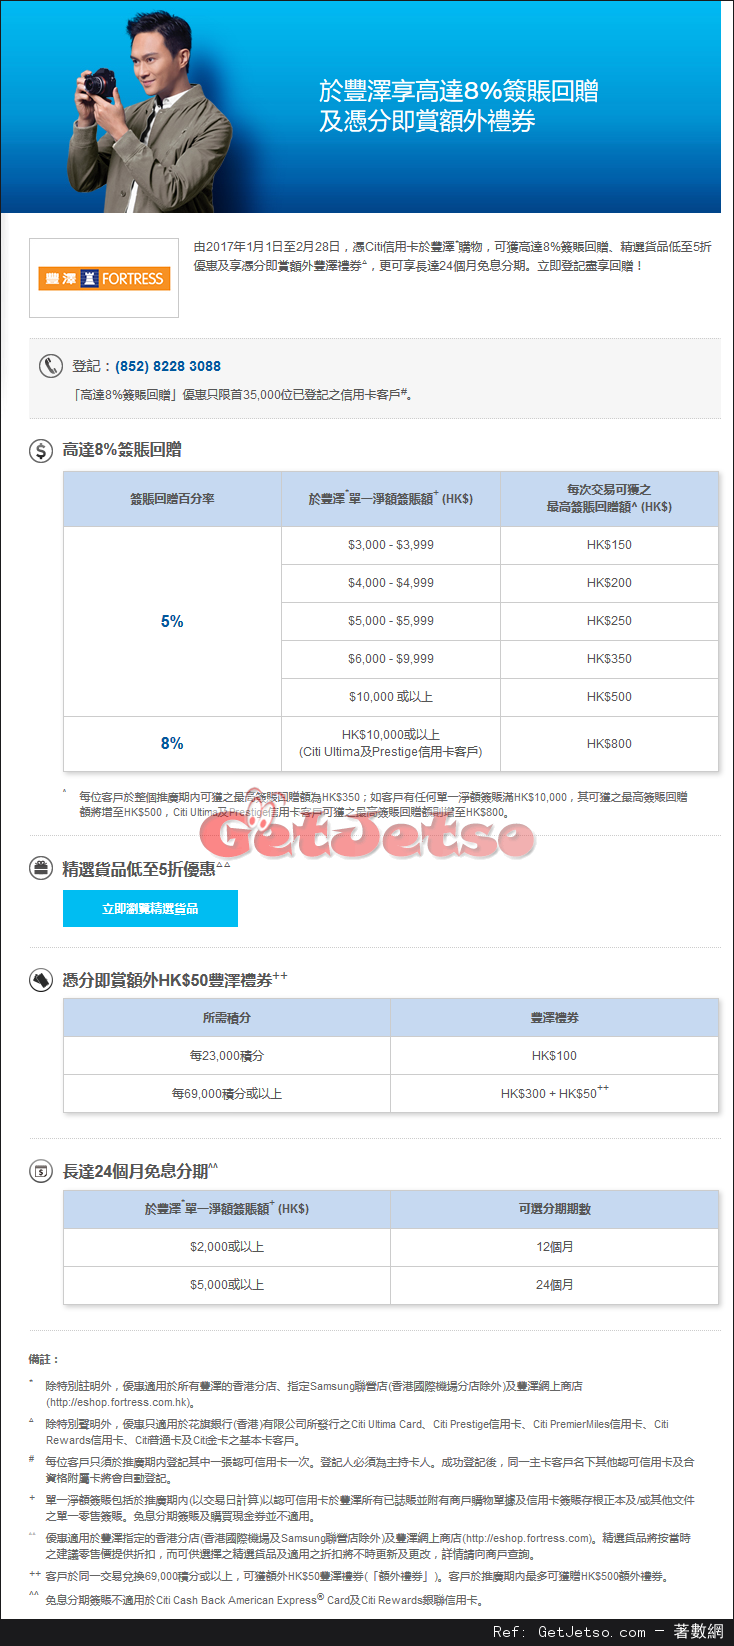 Citi 信用卡享豐澤電器精選貨品低至5折優惠(至17年2月28日)圖片1